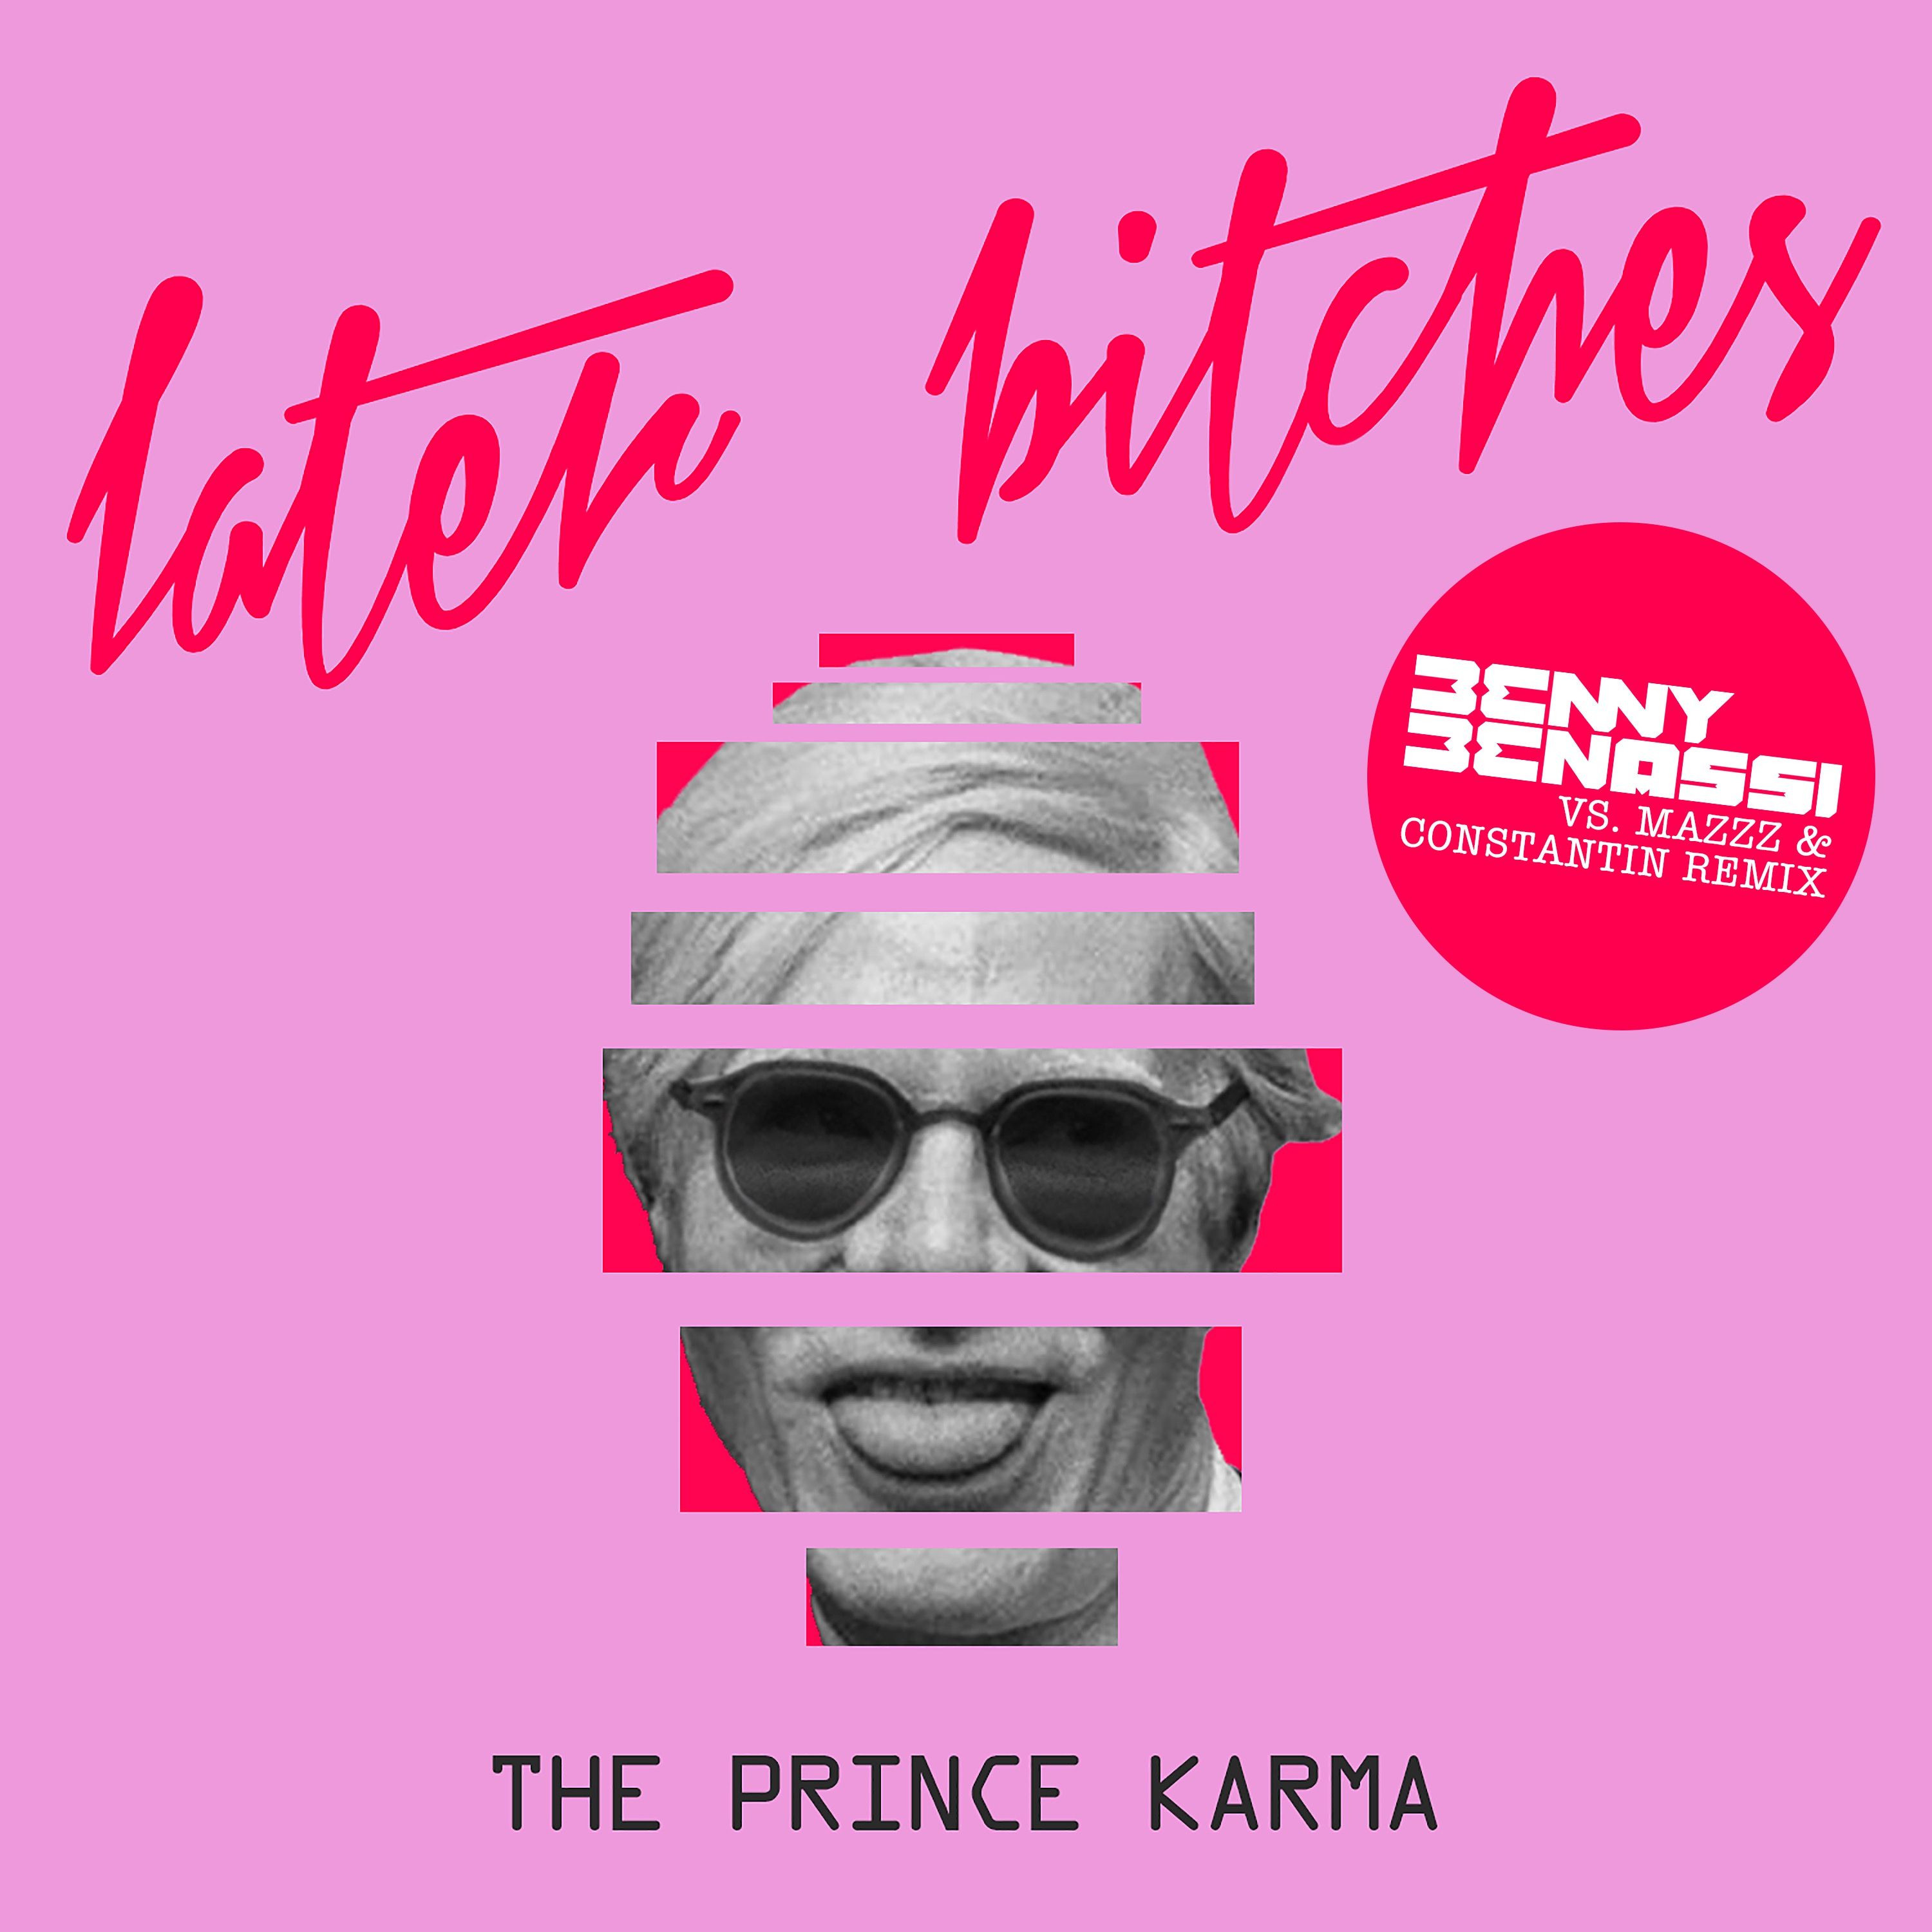 Lae alla The Prince Karma - Later Bitches (Benny Benassi Vs. MazZz & Constantin Remix)